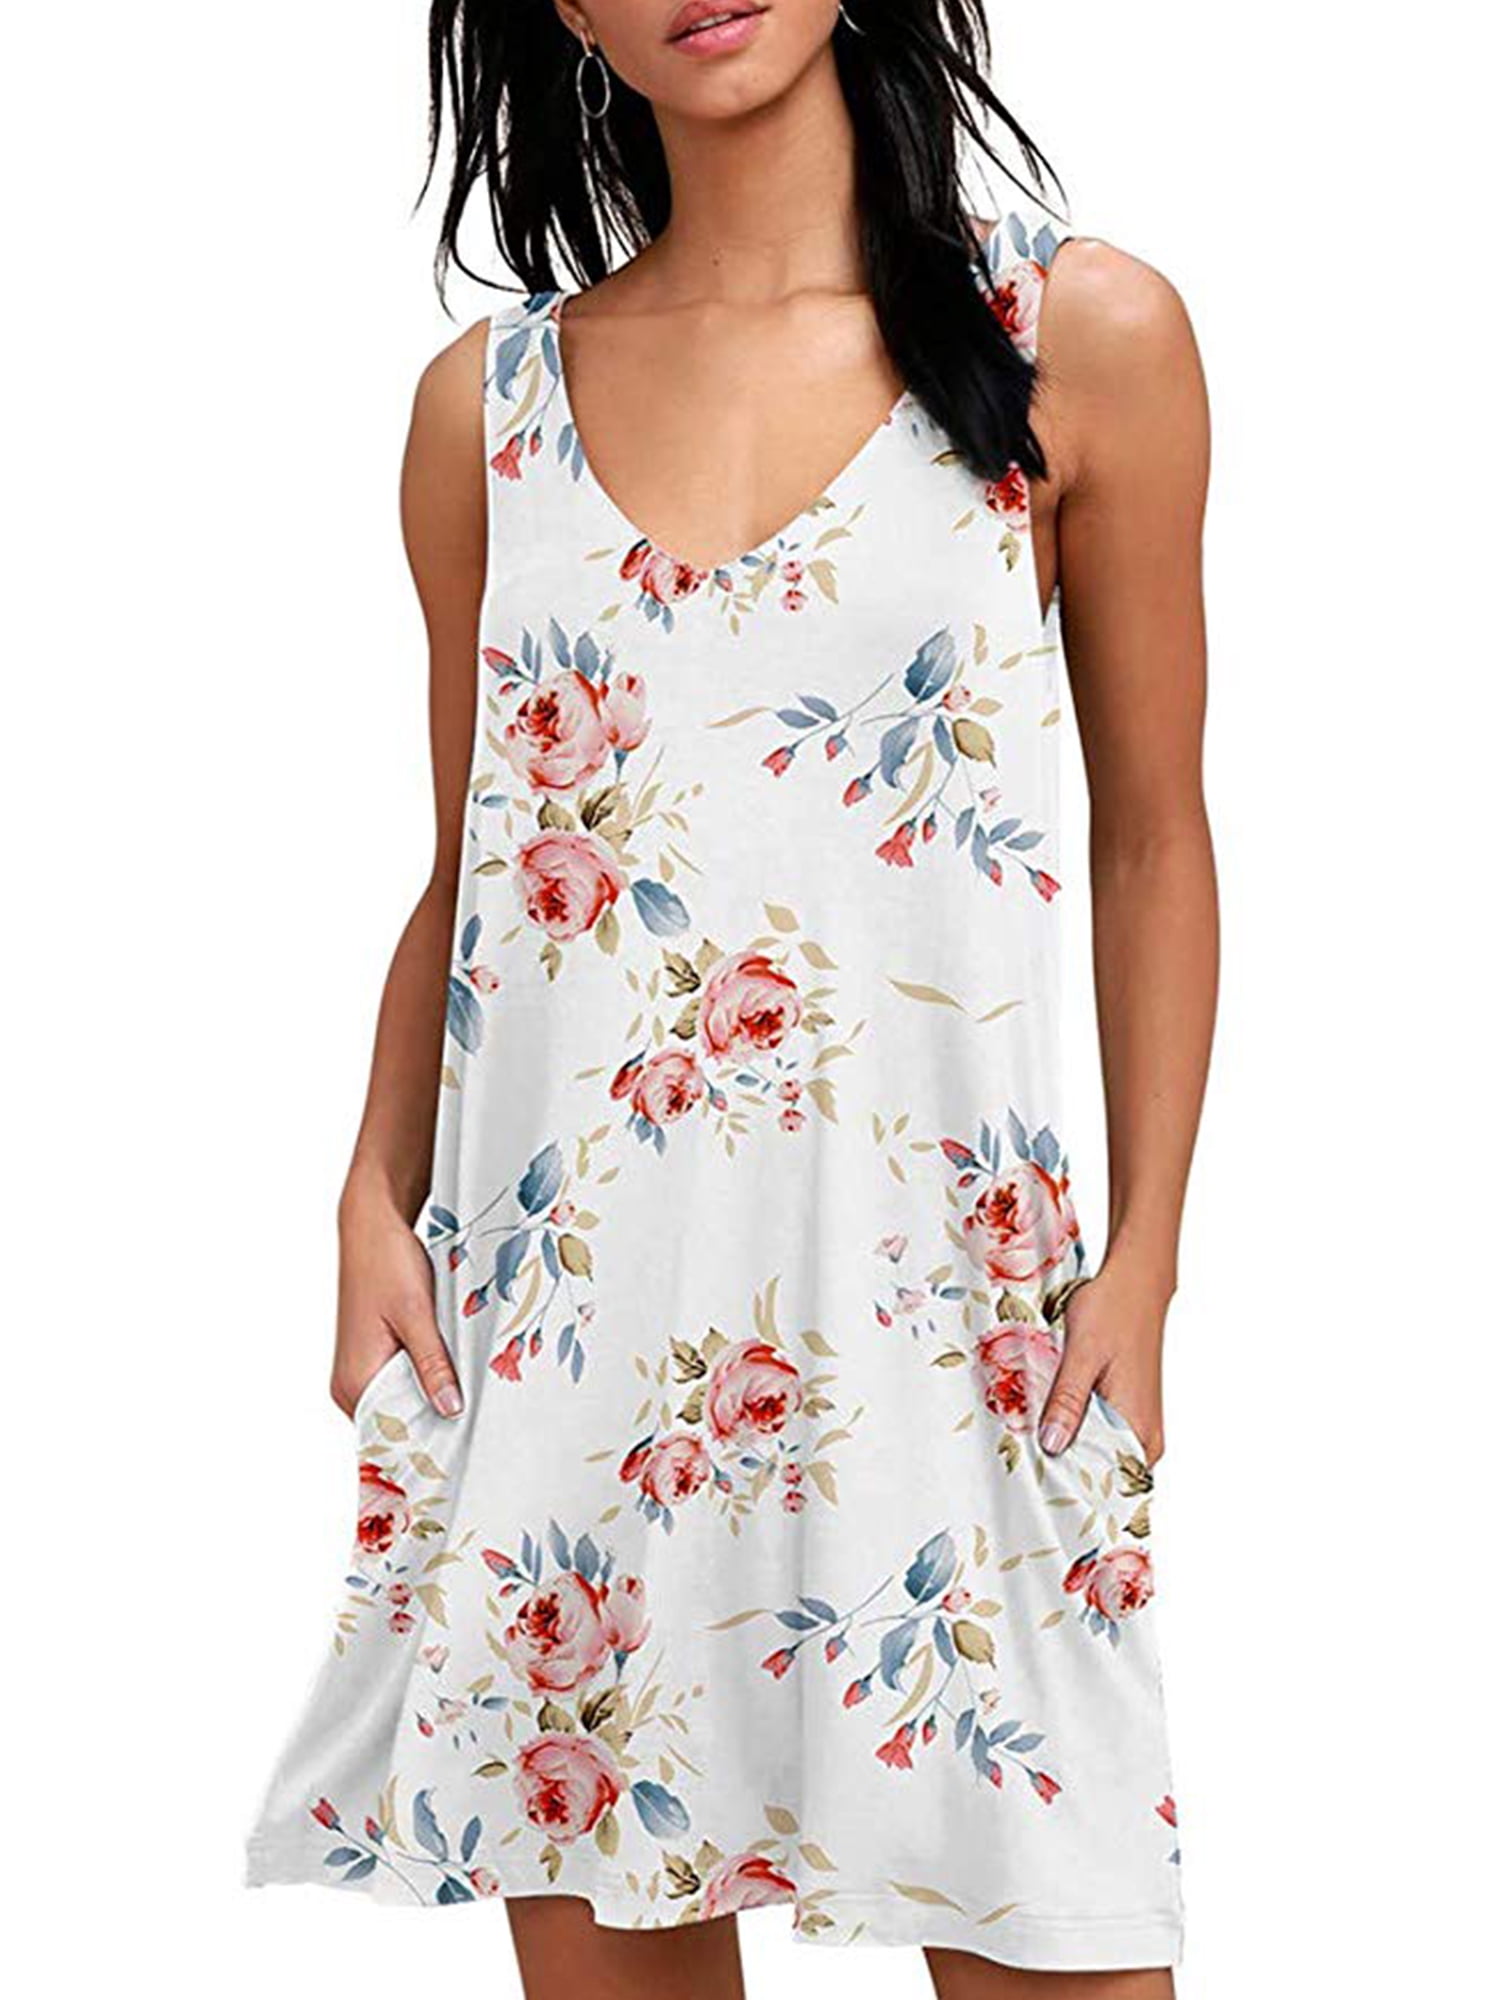 Women Summer Casual Sleeveless Pleated Tank Dress Flower Print Loose Swing Midi T Shirt Dress Floral Beach Sundresses 